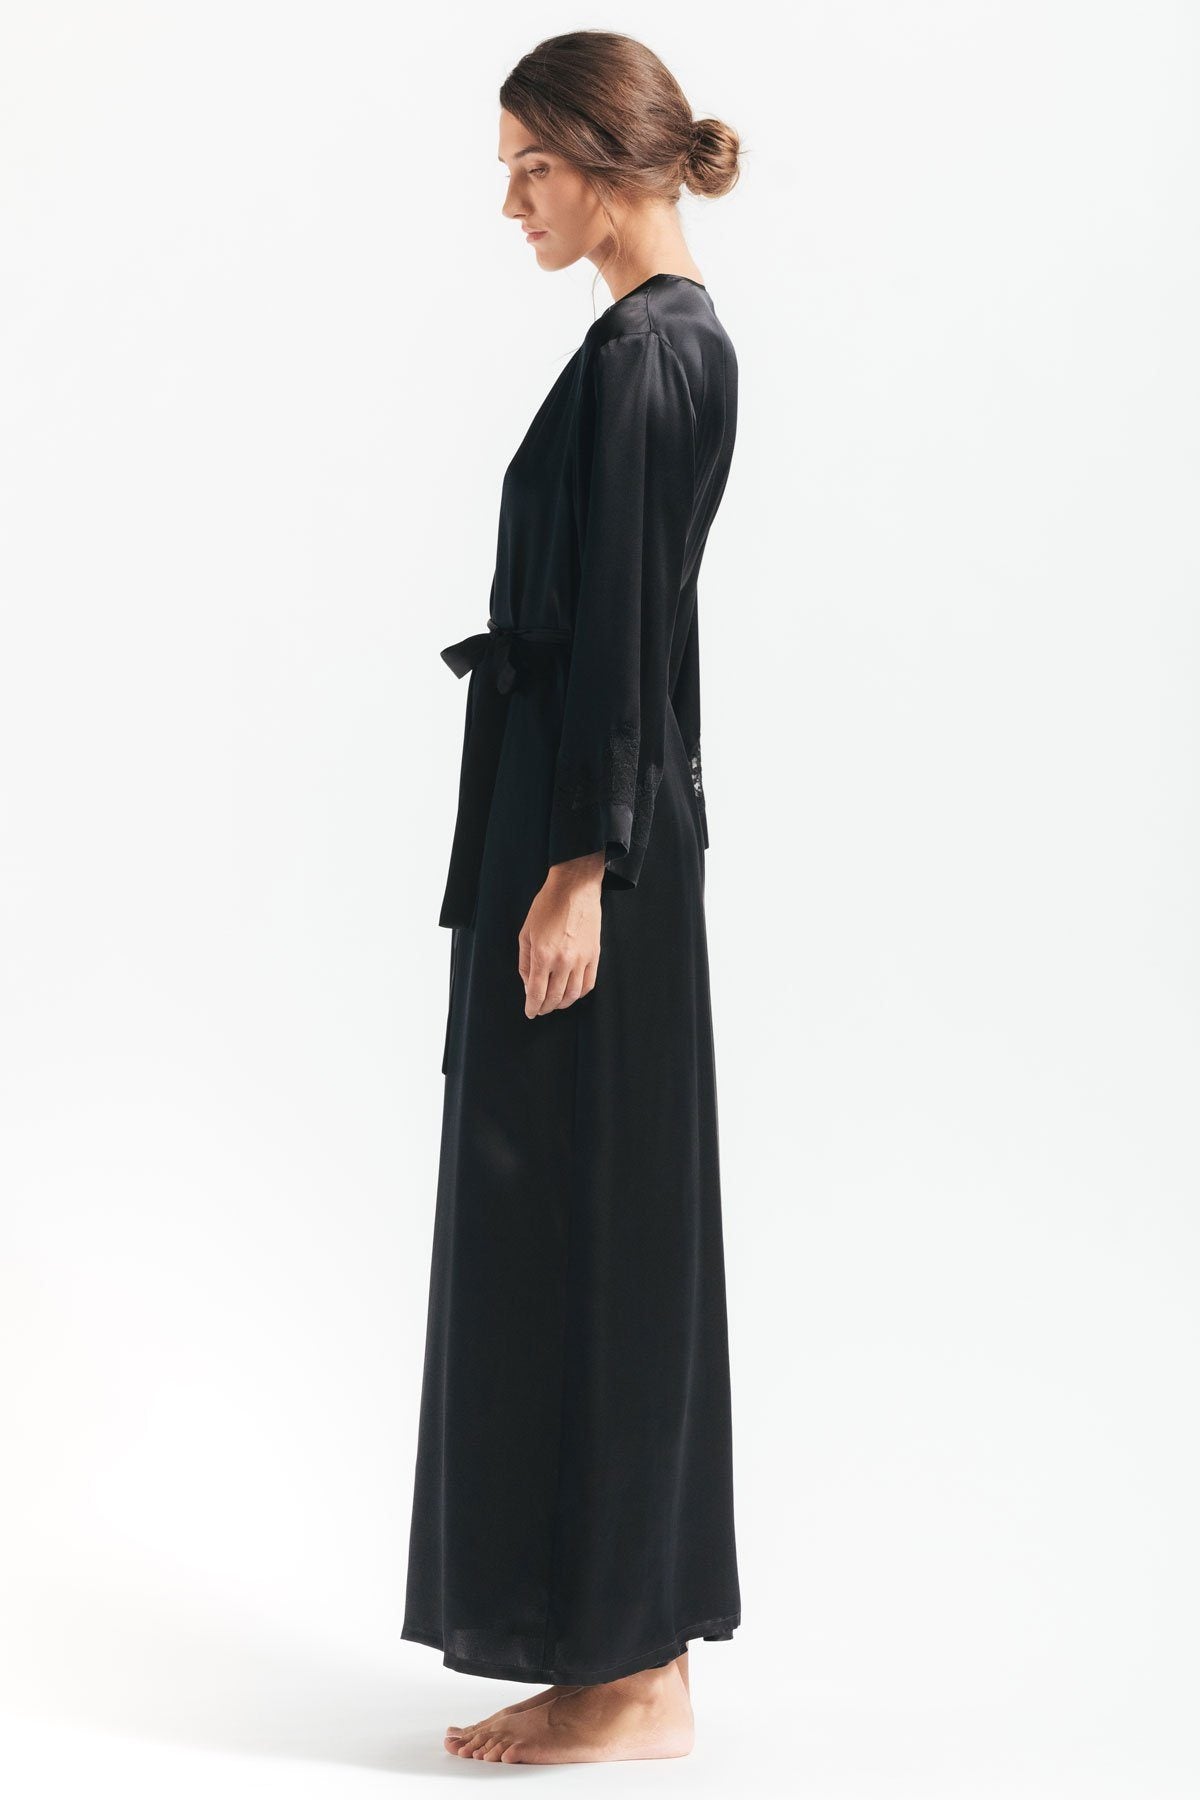 Side profile of Morgan Long black silk robe 